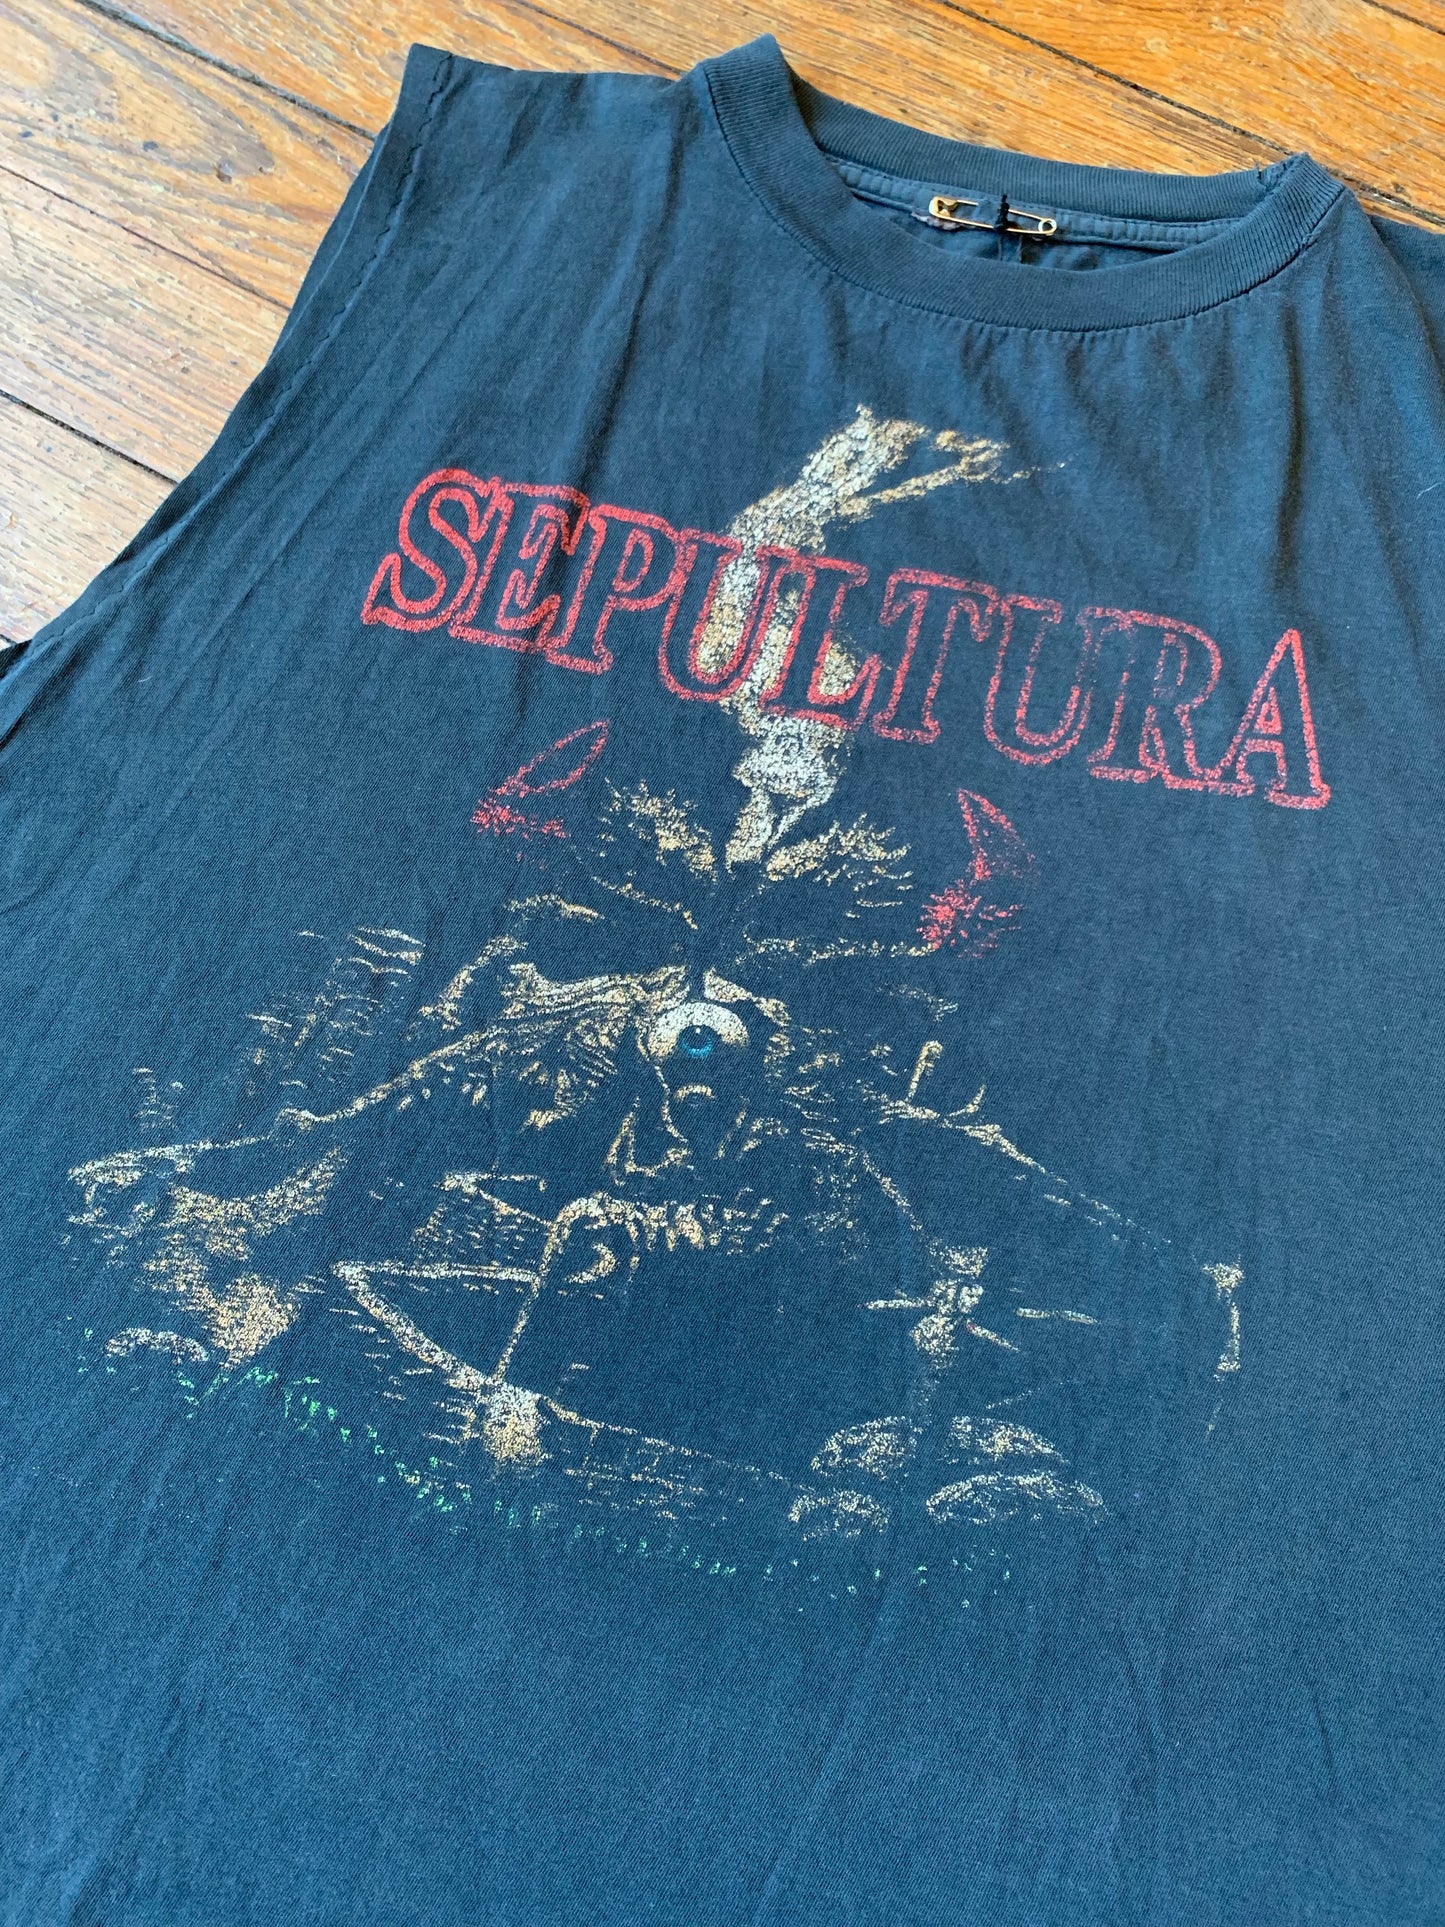 Vintage 1991 Sepultura Arise European Tour Sleeveless Tee